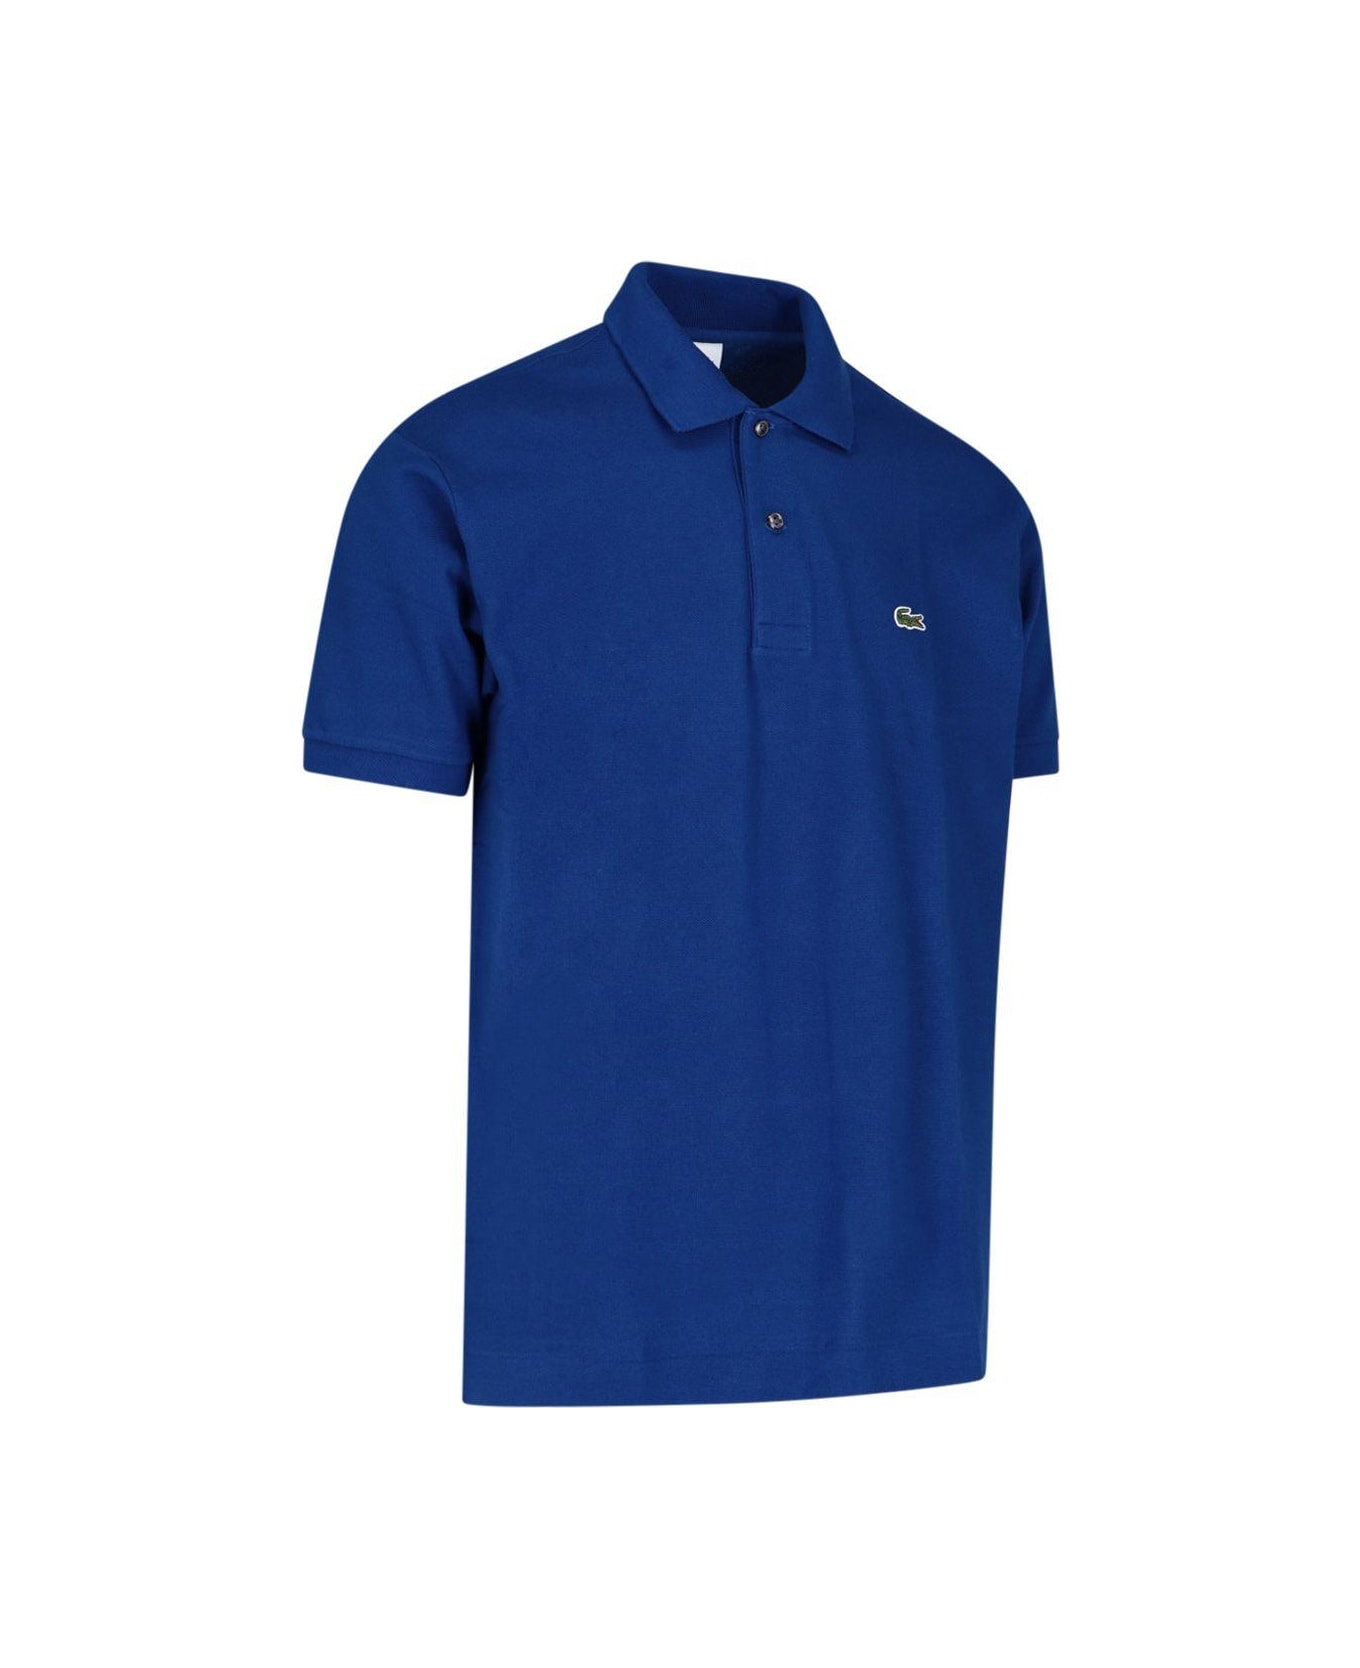 Lacoste Classic Design Colosseum Polo Shirt - Blue